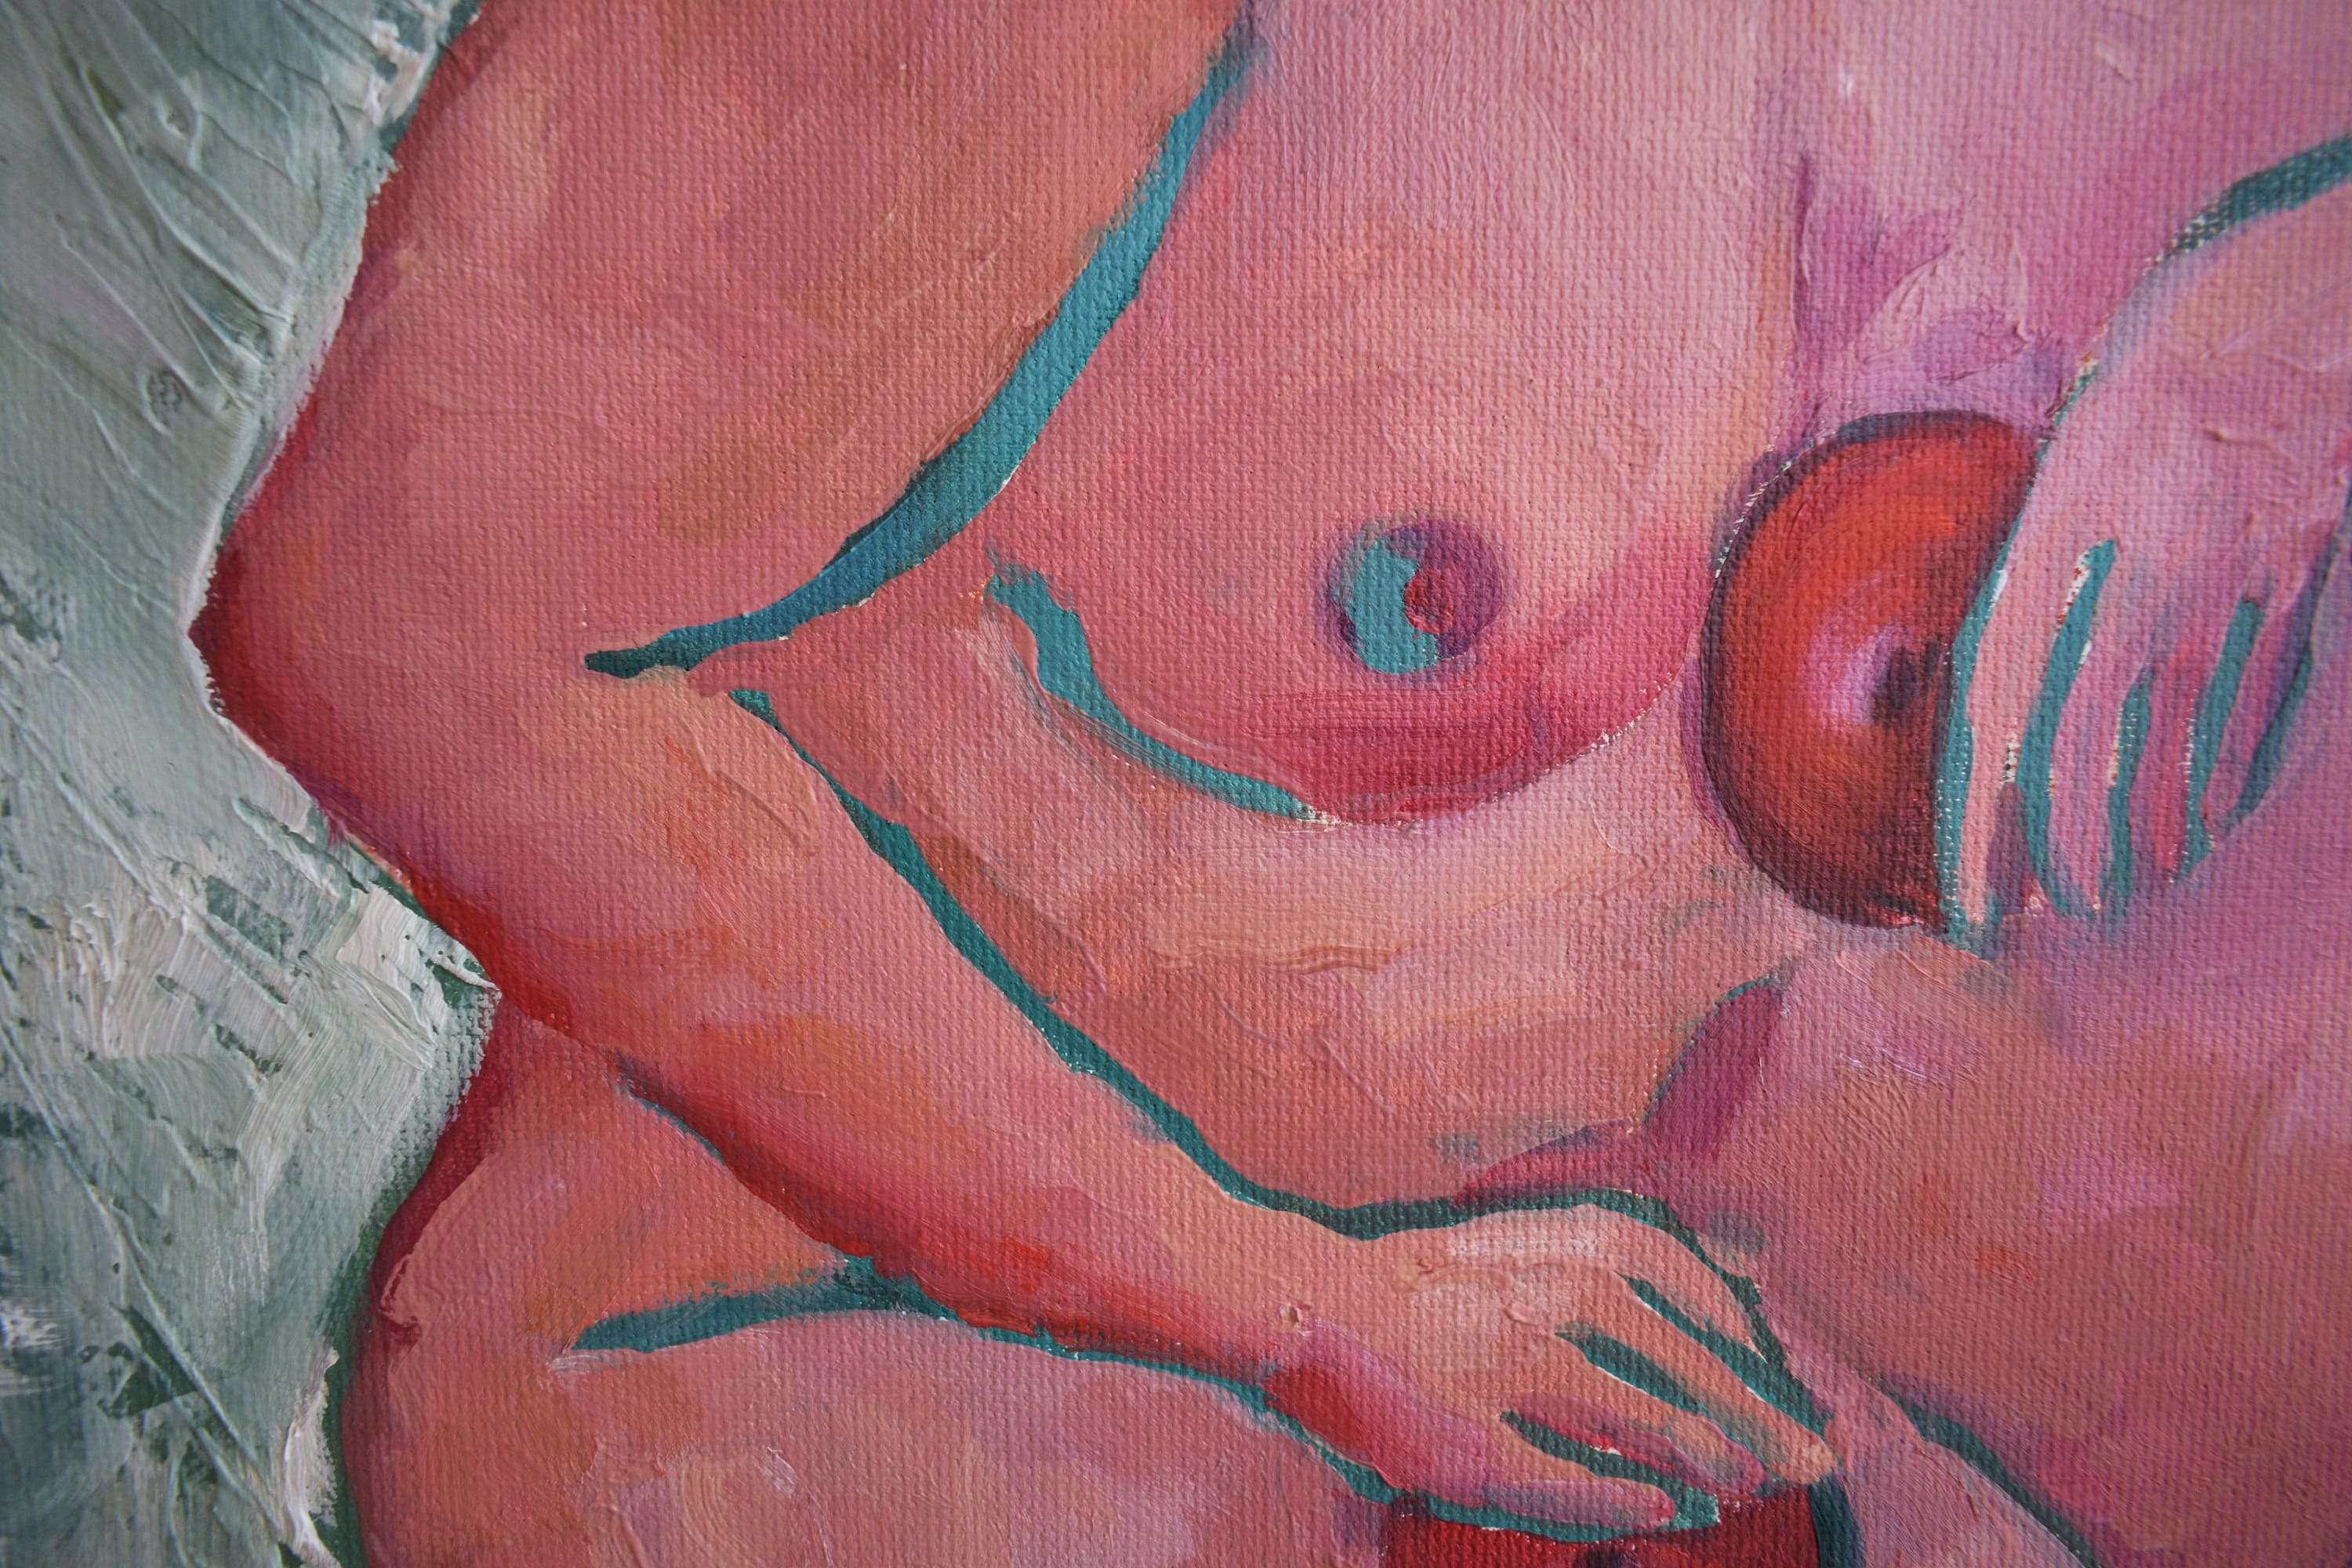 Painting by Marina Venediktova Etude with apples-1 detail